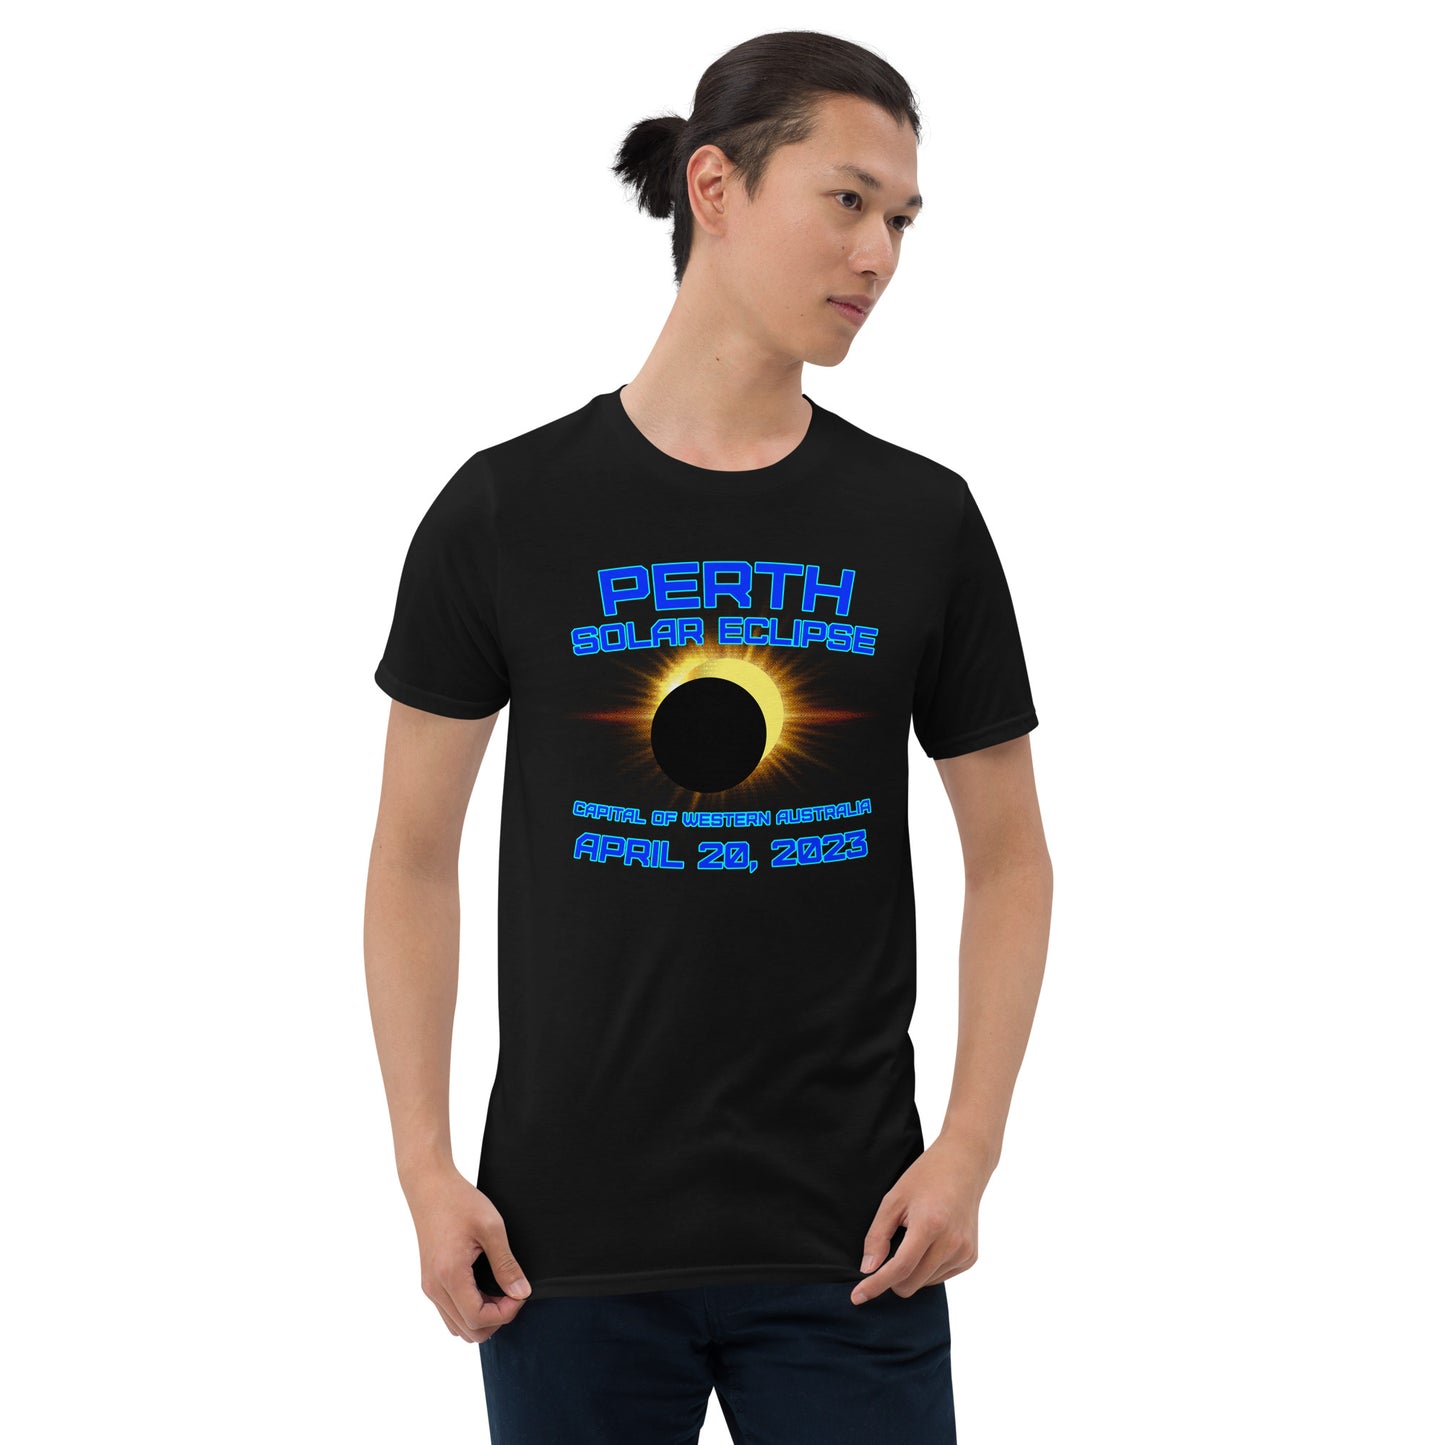 Perth - Partial Solar Eclipse 2023